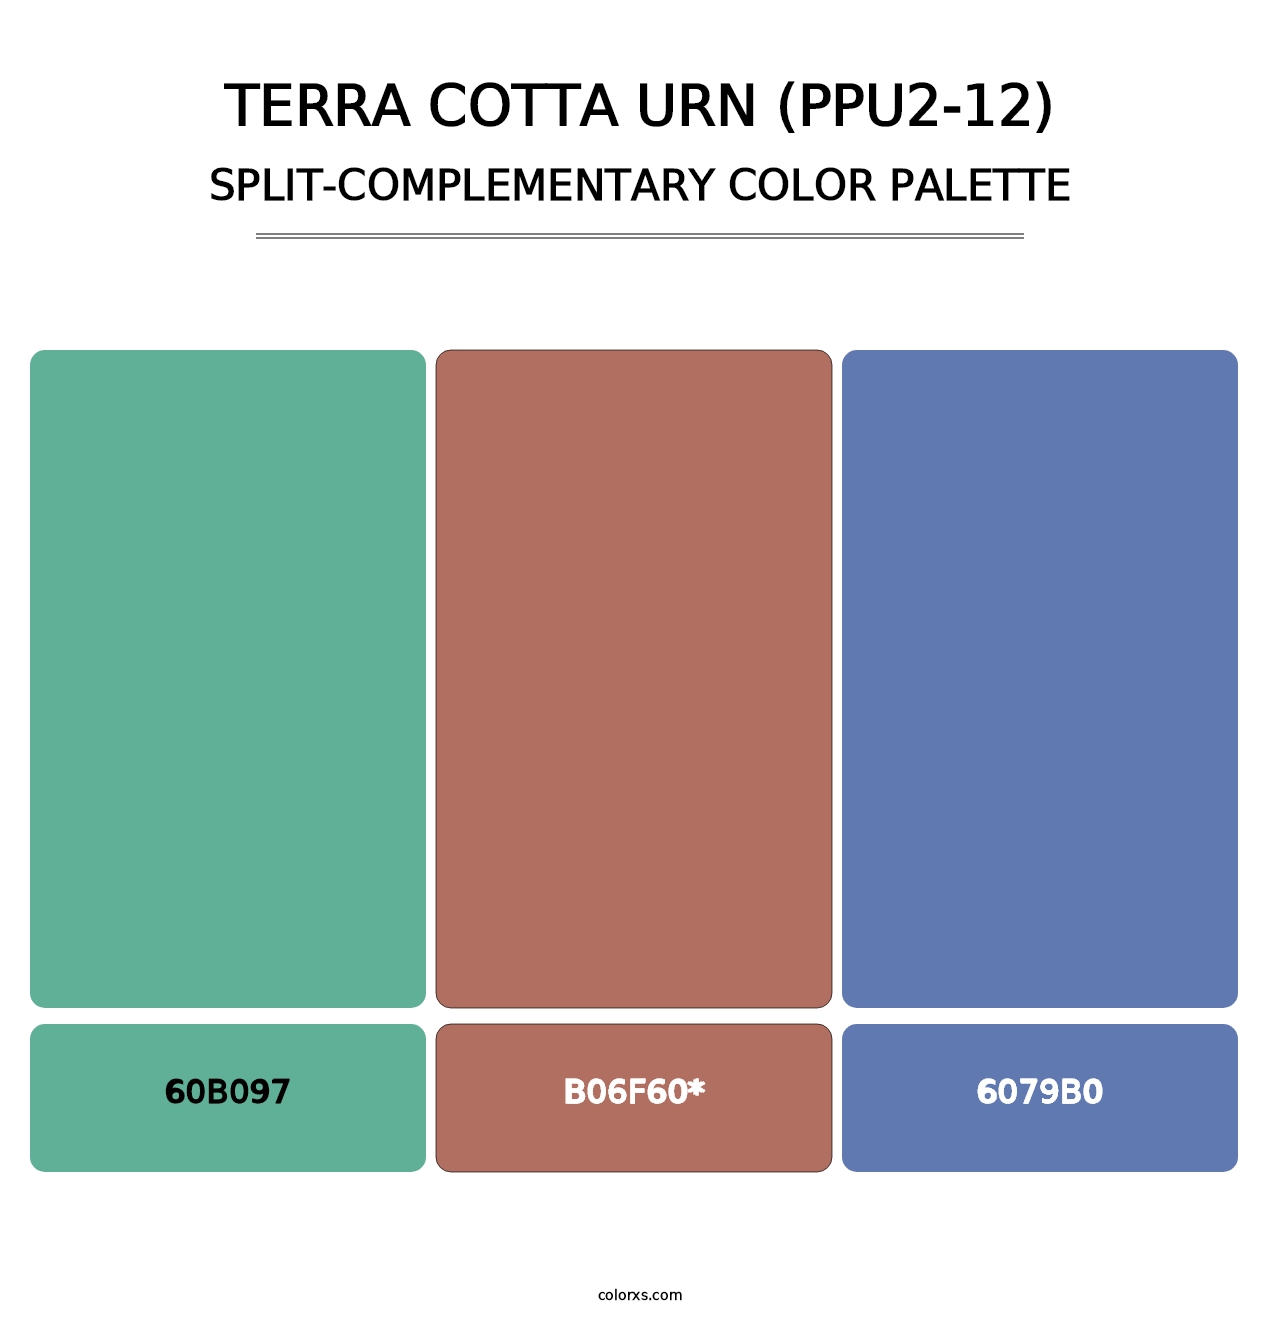 Terra Cotta Urn (PPU2-12) - Split-Complementary Color Palette